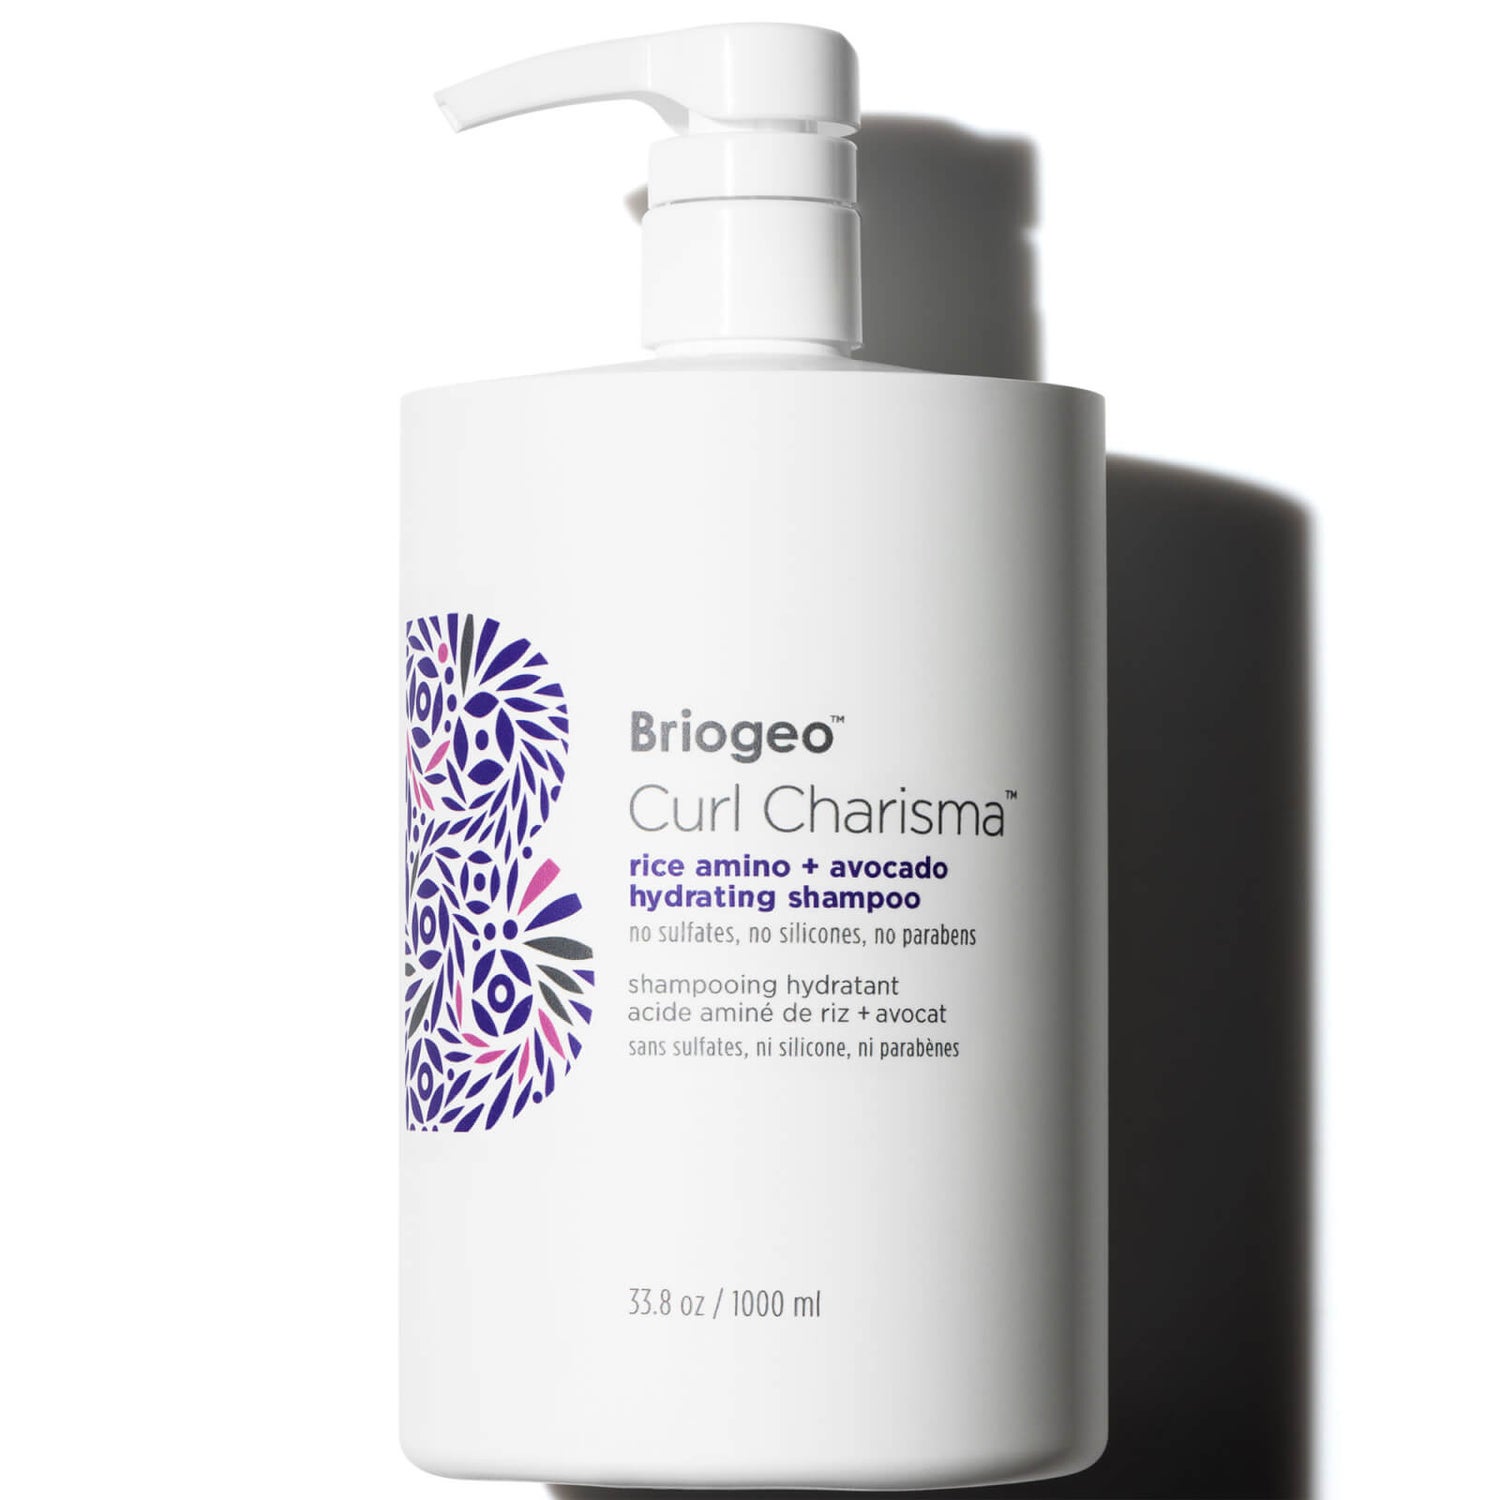 Briogeo Curl Charisma™ Rice Amino + Avocado Hydrating Shampoo 33.8 oz